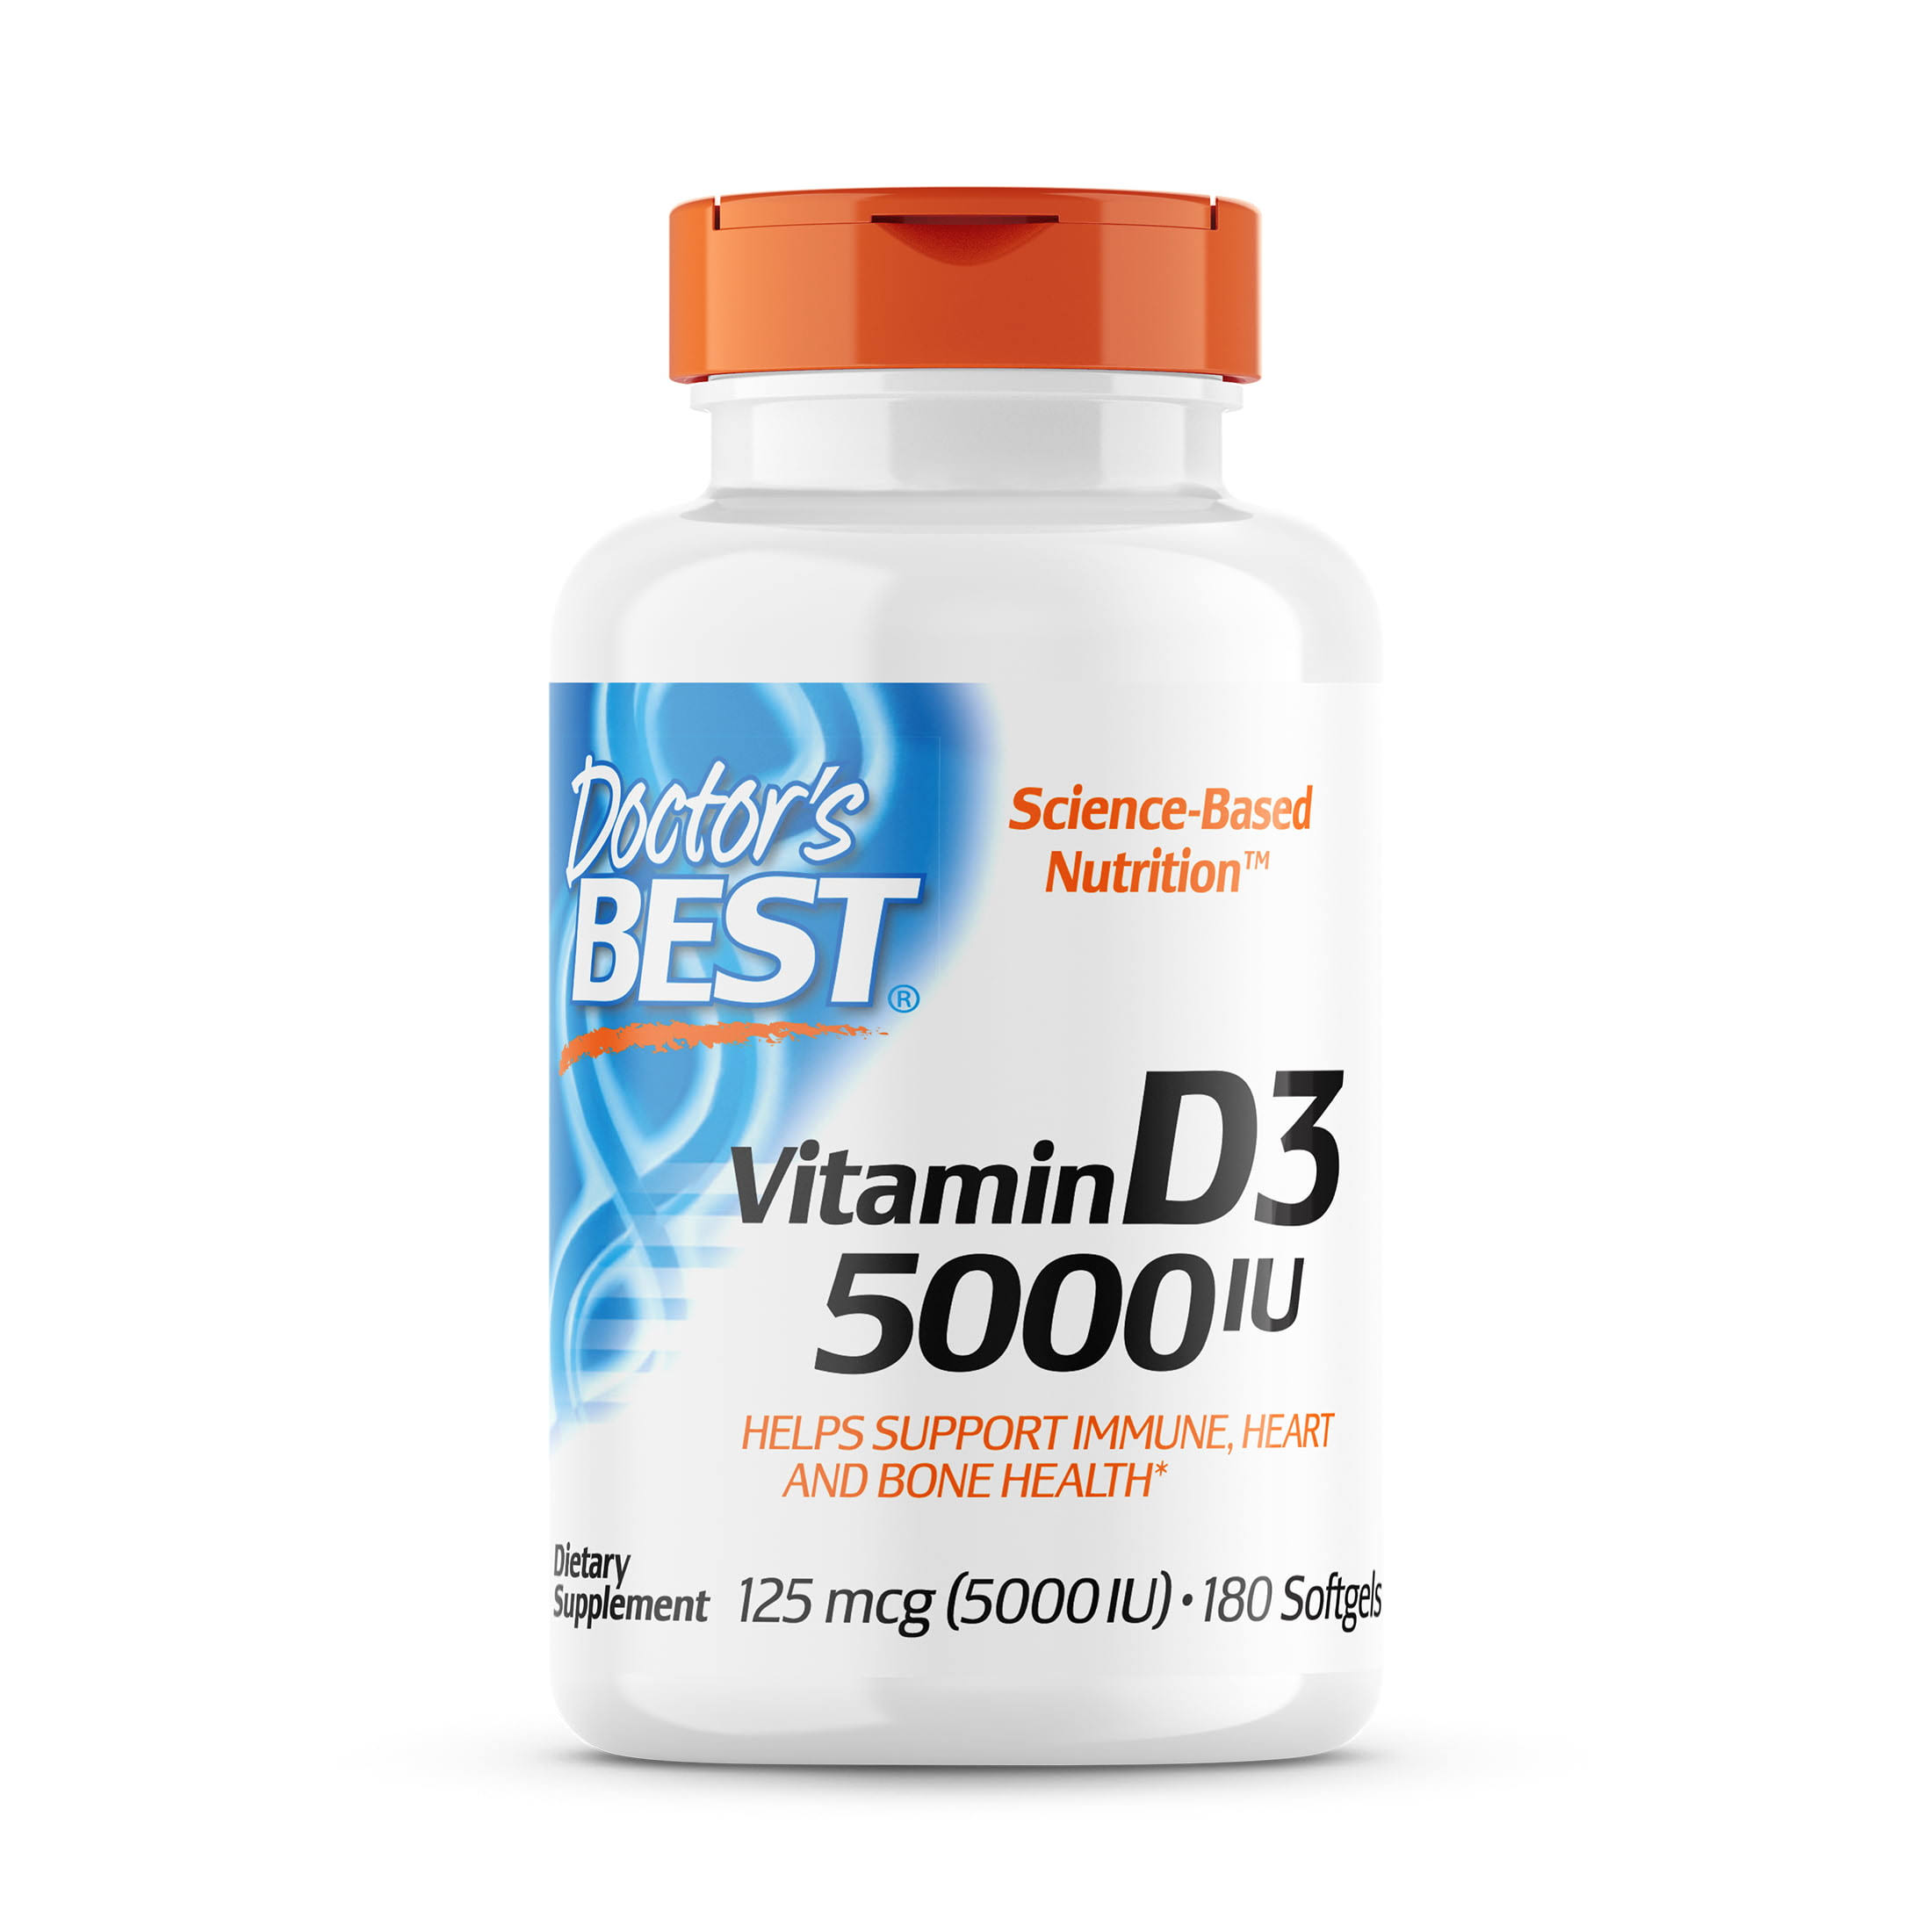 Doctor's Best Vitamin D3 - 5000iu, 180 Soft Gels